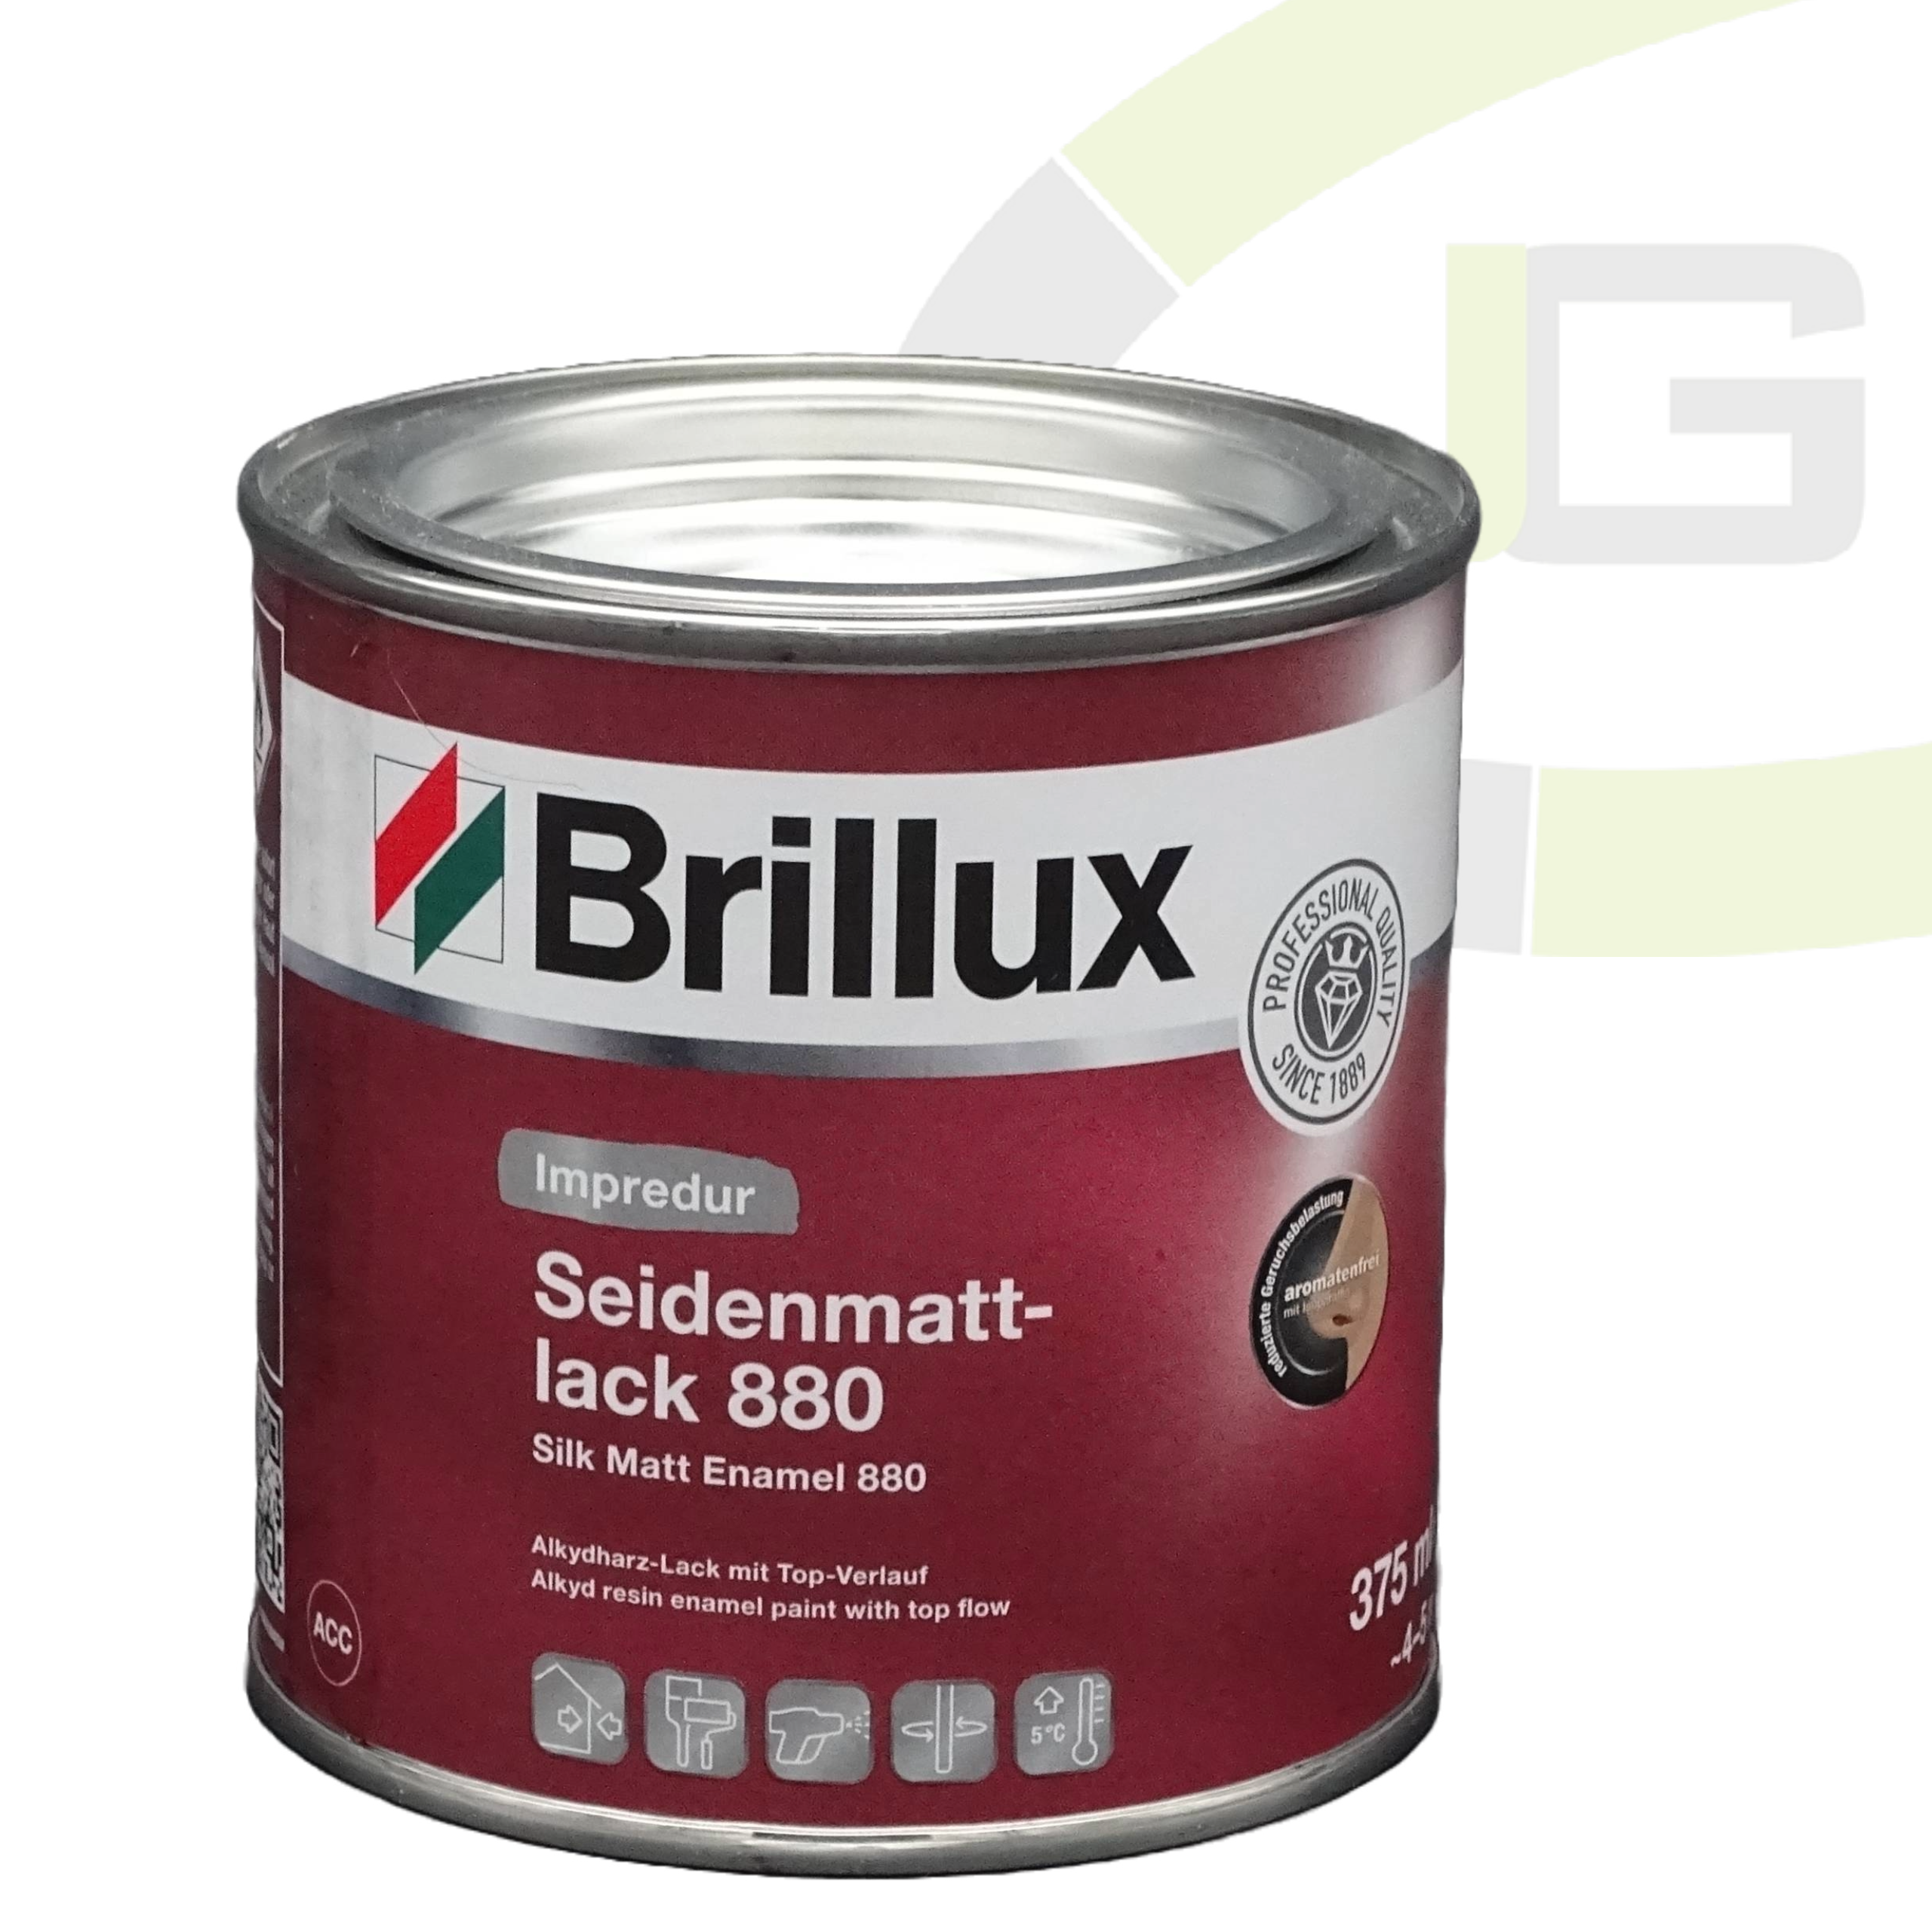 Brillux Impredur Seidenmattlack 880 - 375 ml / Lösungsmittelhaltiger Endlack